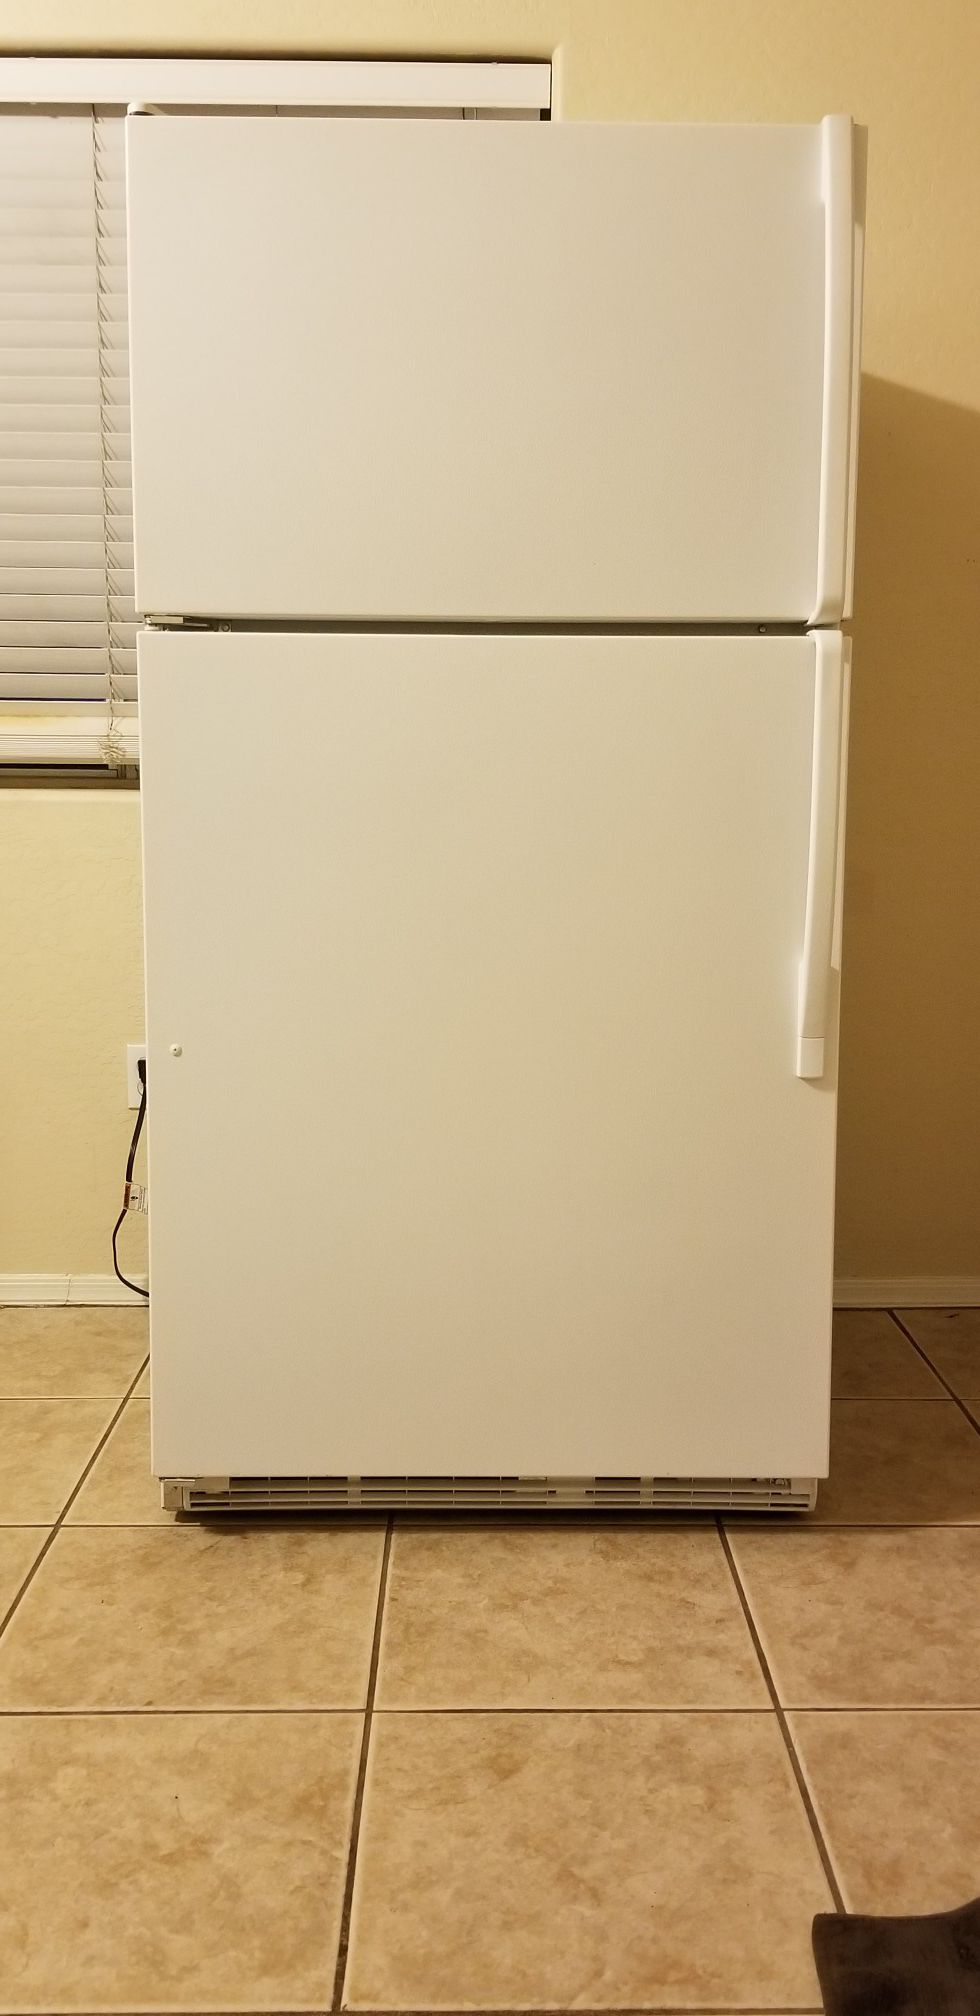 Whirlpool signature fridge freezer refrigerator